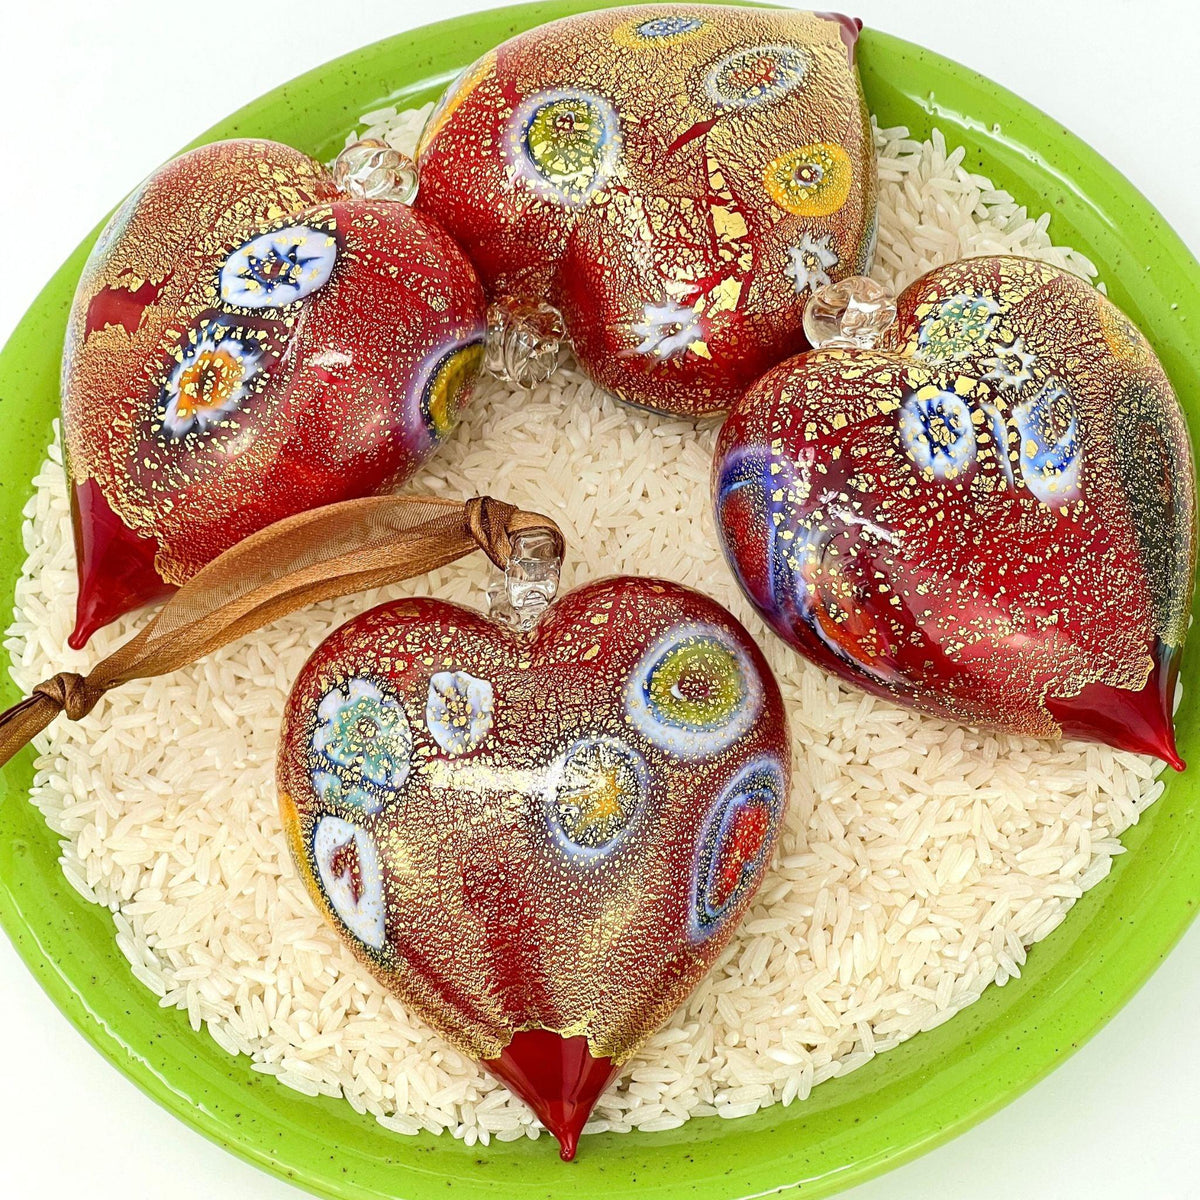 Millefiori Murano Glass Blown Heart Hanging Ornament, Large, Red, 24 karat gold foil finish at MyItalianDecor